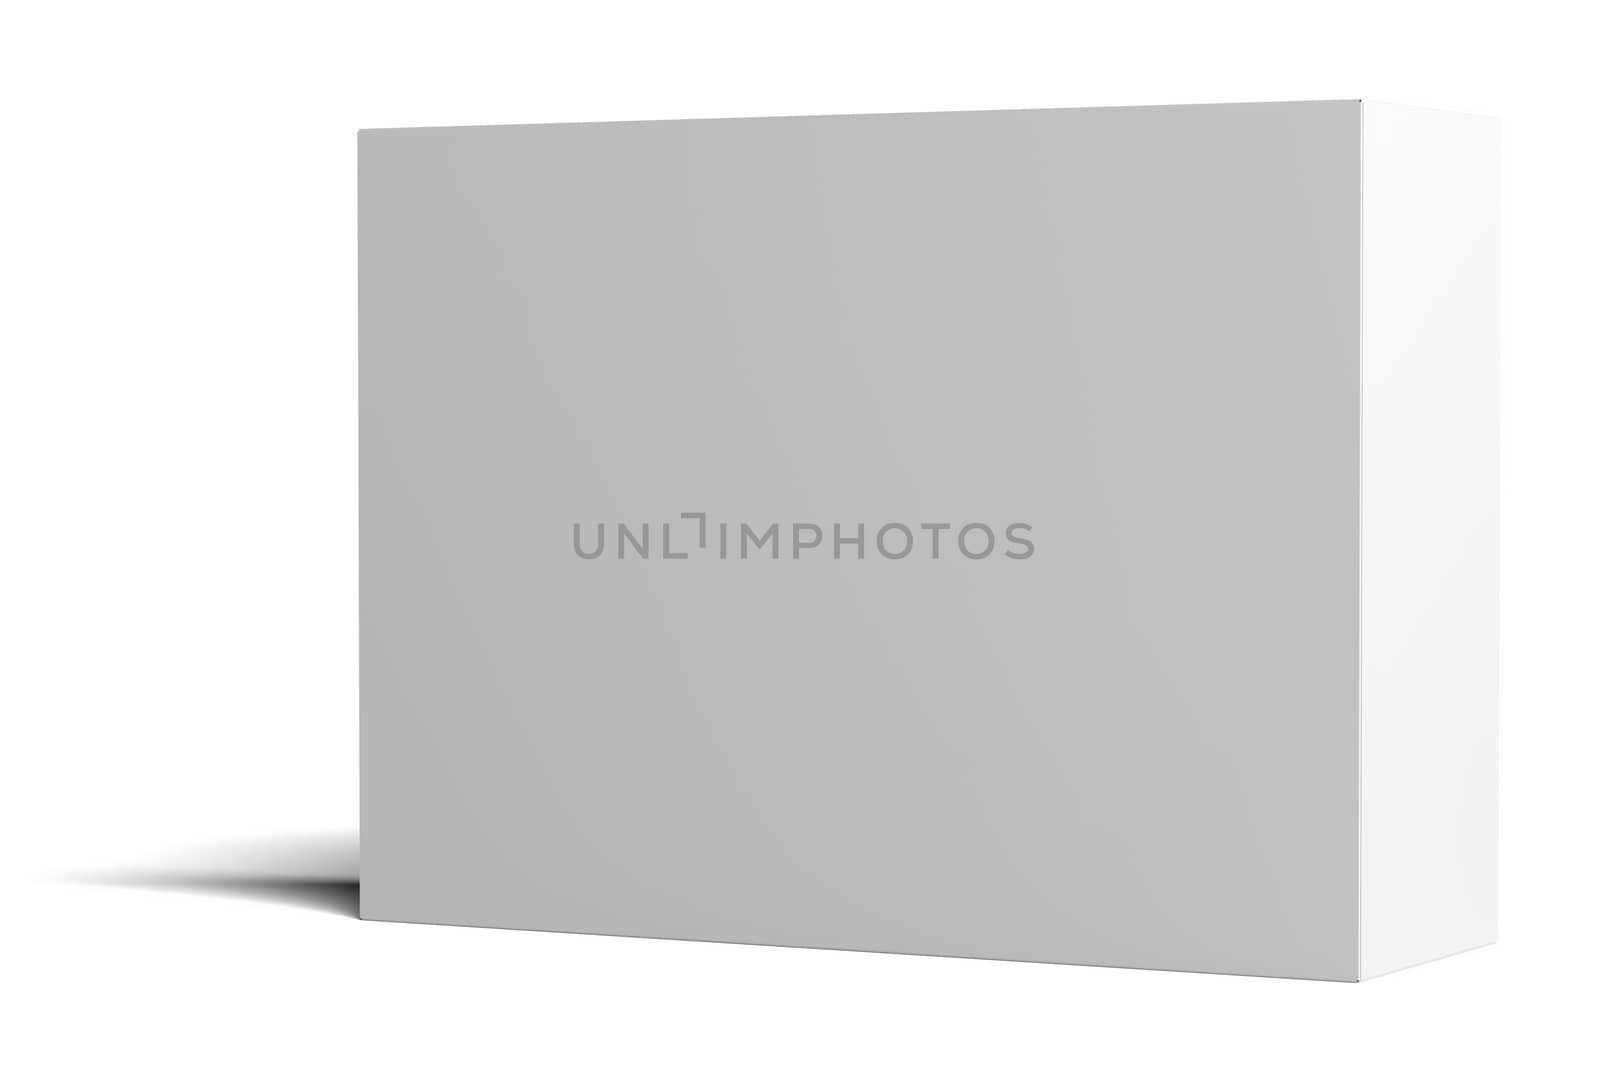 White empty horizontal packing cardboard box. Isolated on white background. 3D illustration